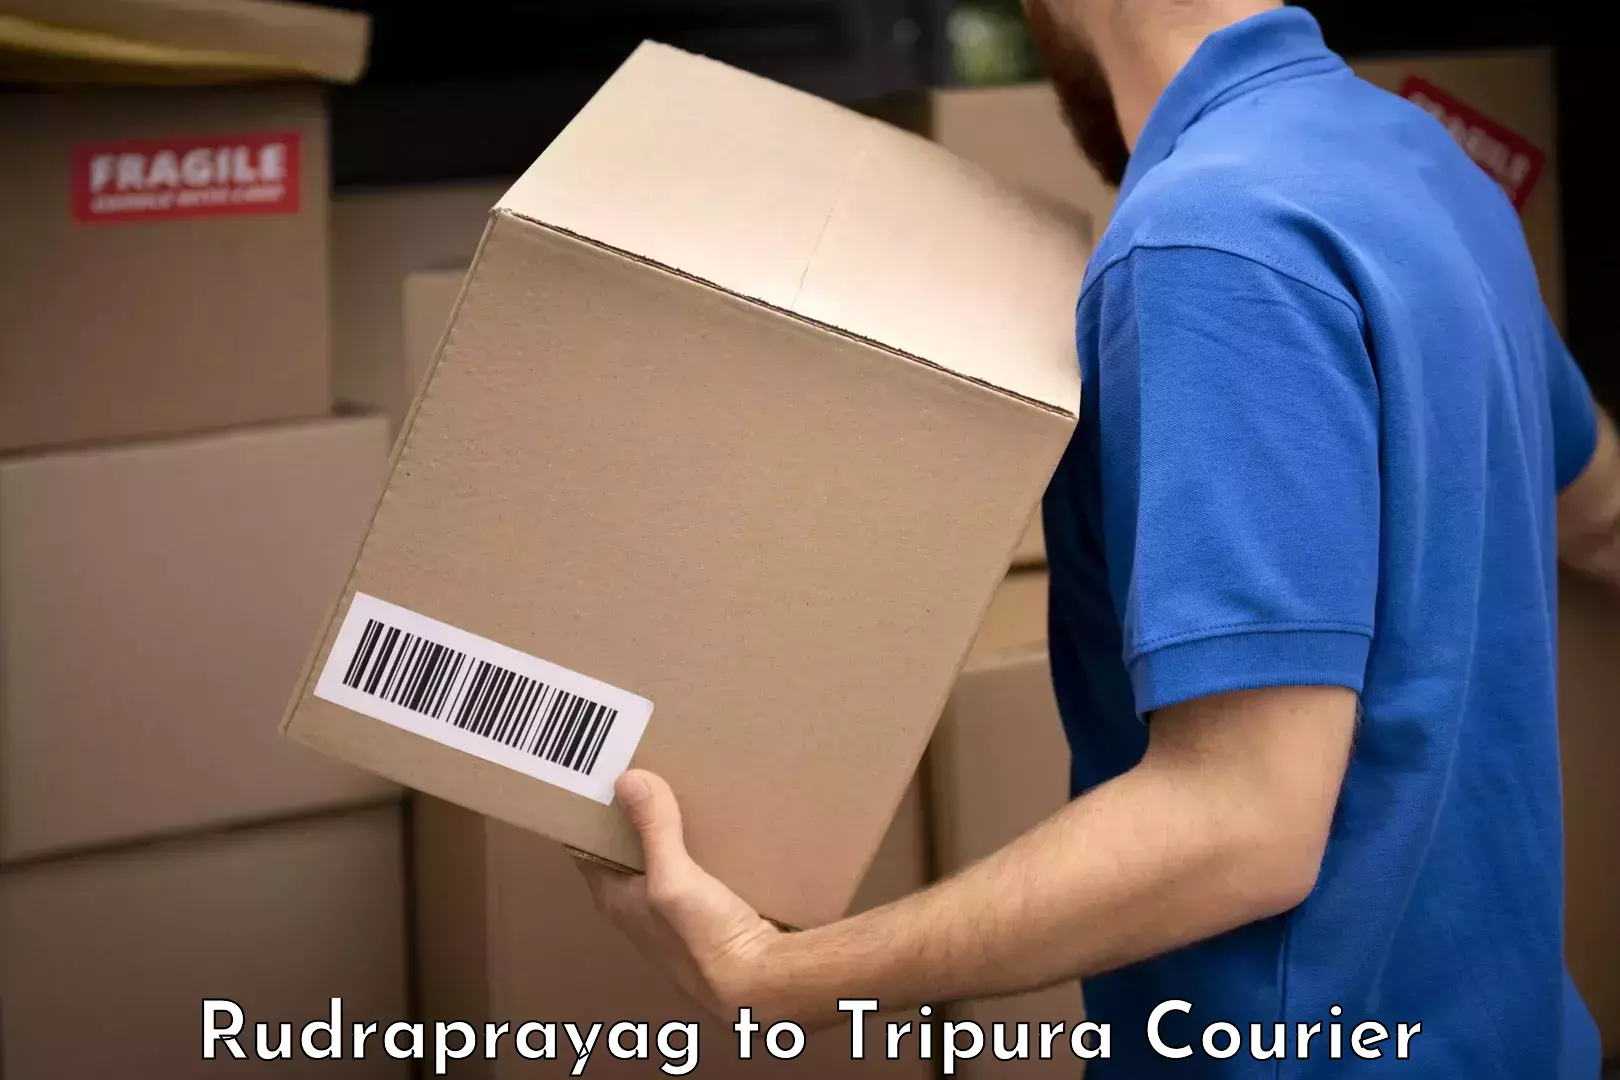 Baggage handling services Rudraprayag to Udaipur Tripura